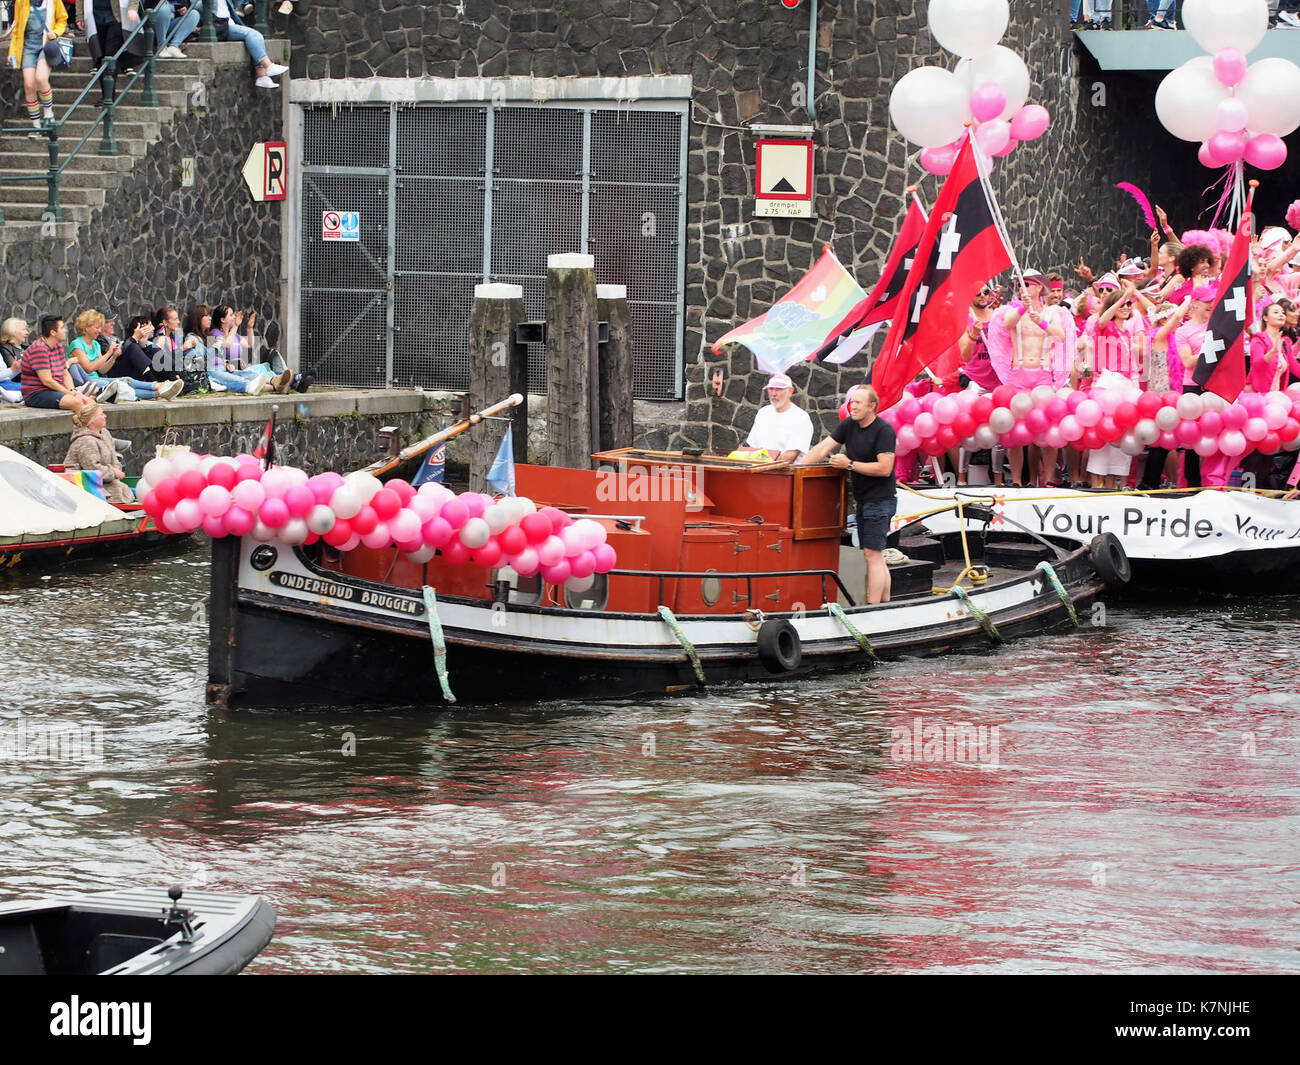 Bote 2 Mi orgullo mi Amsterdam, Canal Parade Amsterdam 2017 Foto 4, Onderhoud sleepboot Bruggen Foto de stock